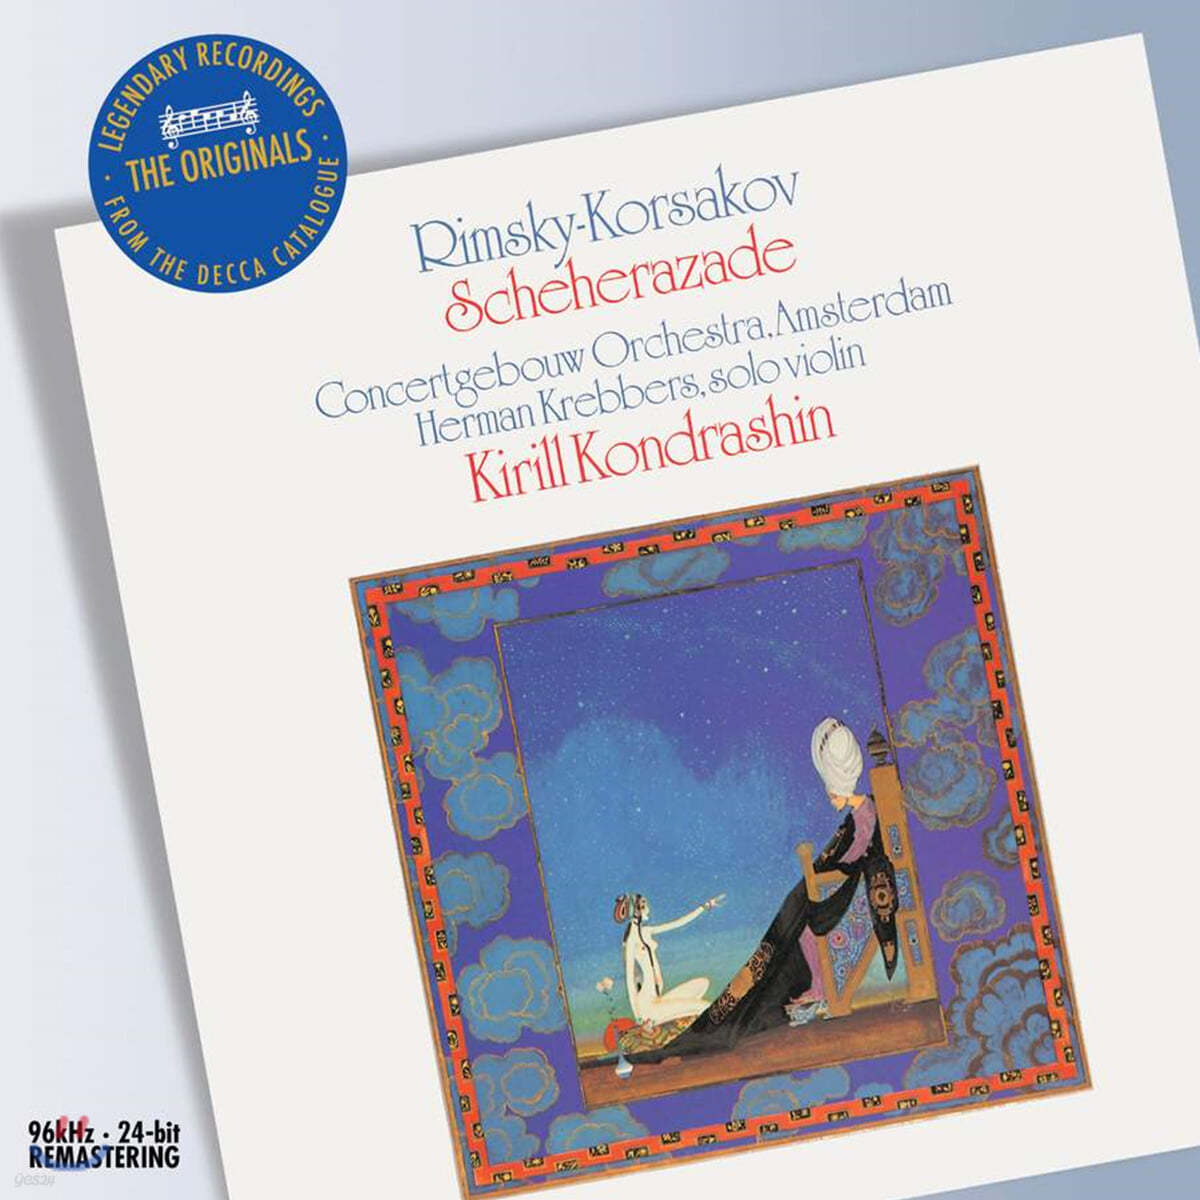 Kirill Kondrashin 림스키-코르사코프: 셰헤라자데 / 보로딘: 교향곡 2번 (Rimsky-Korsakov: Scheherazade / Borodin: Symphony No.2)